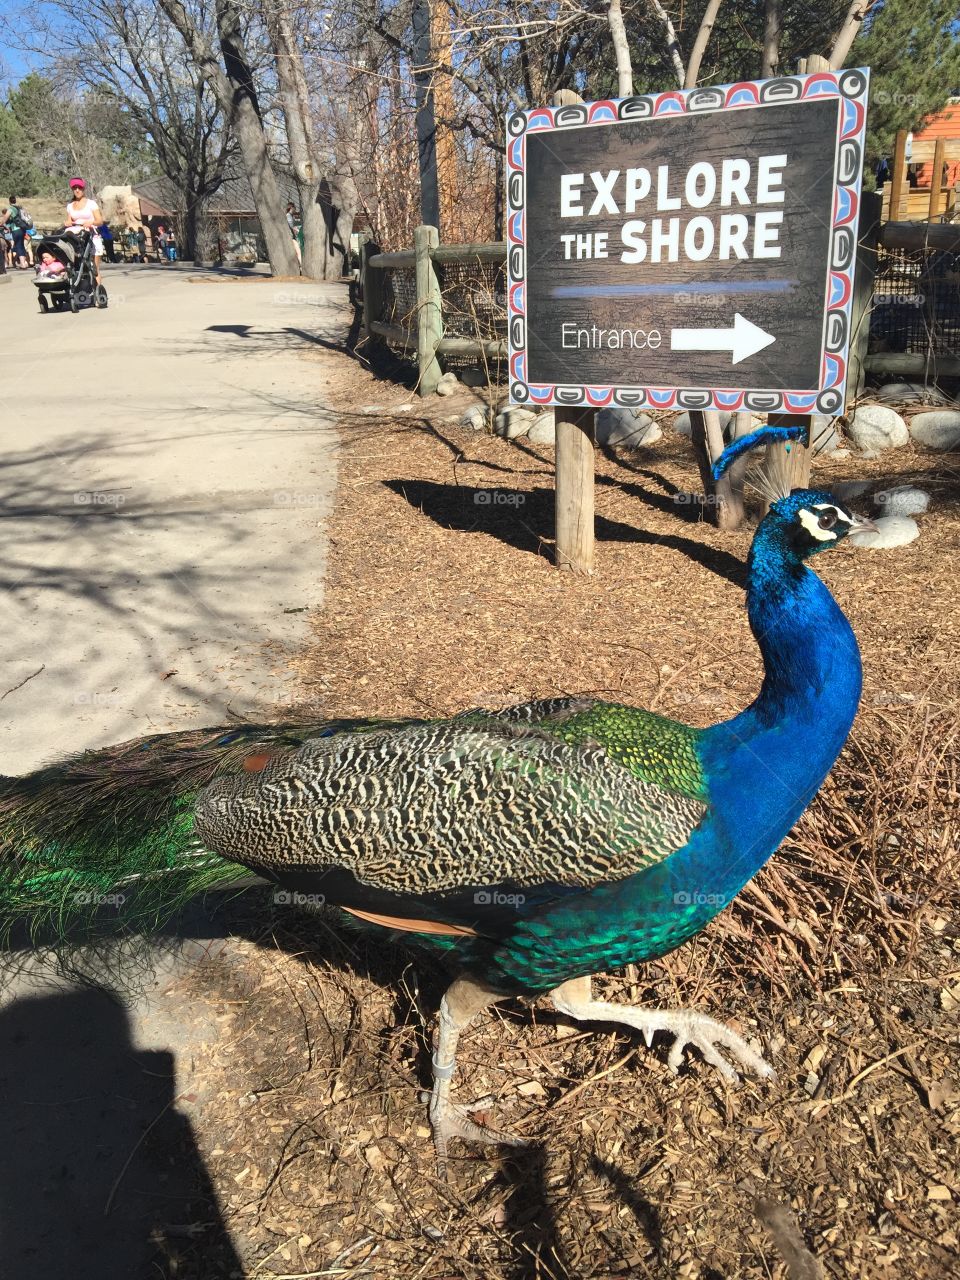 I love how zoos let the peacocks roam free ❤️